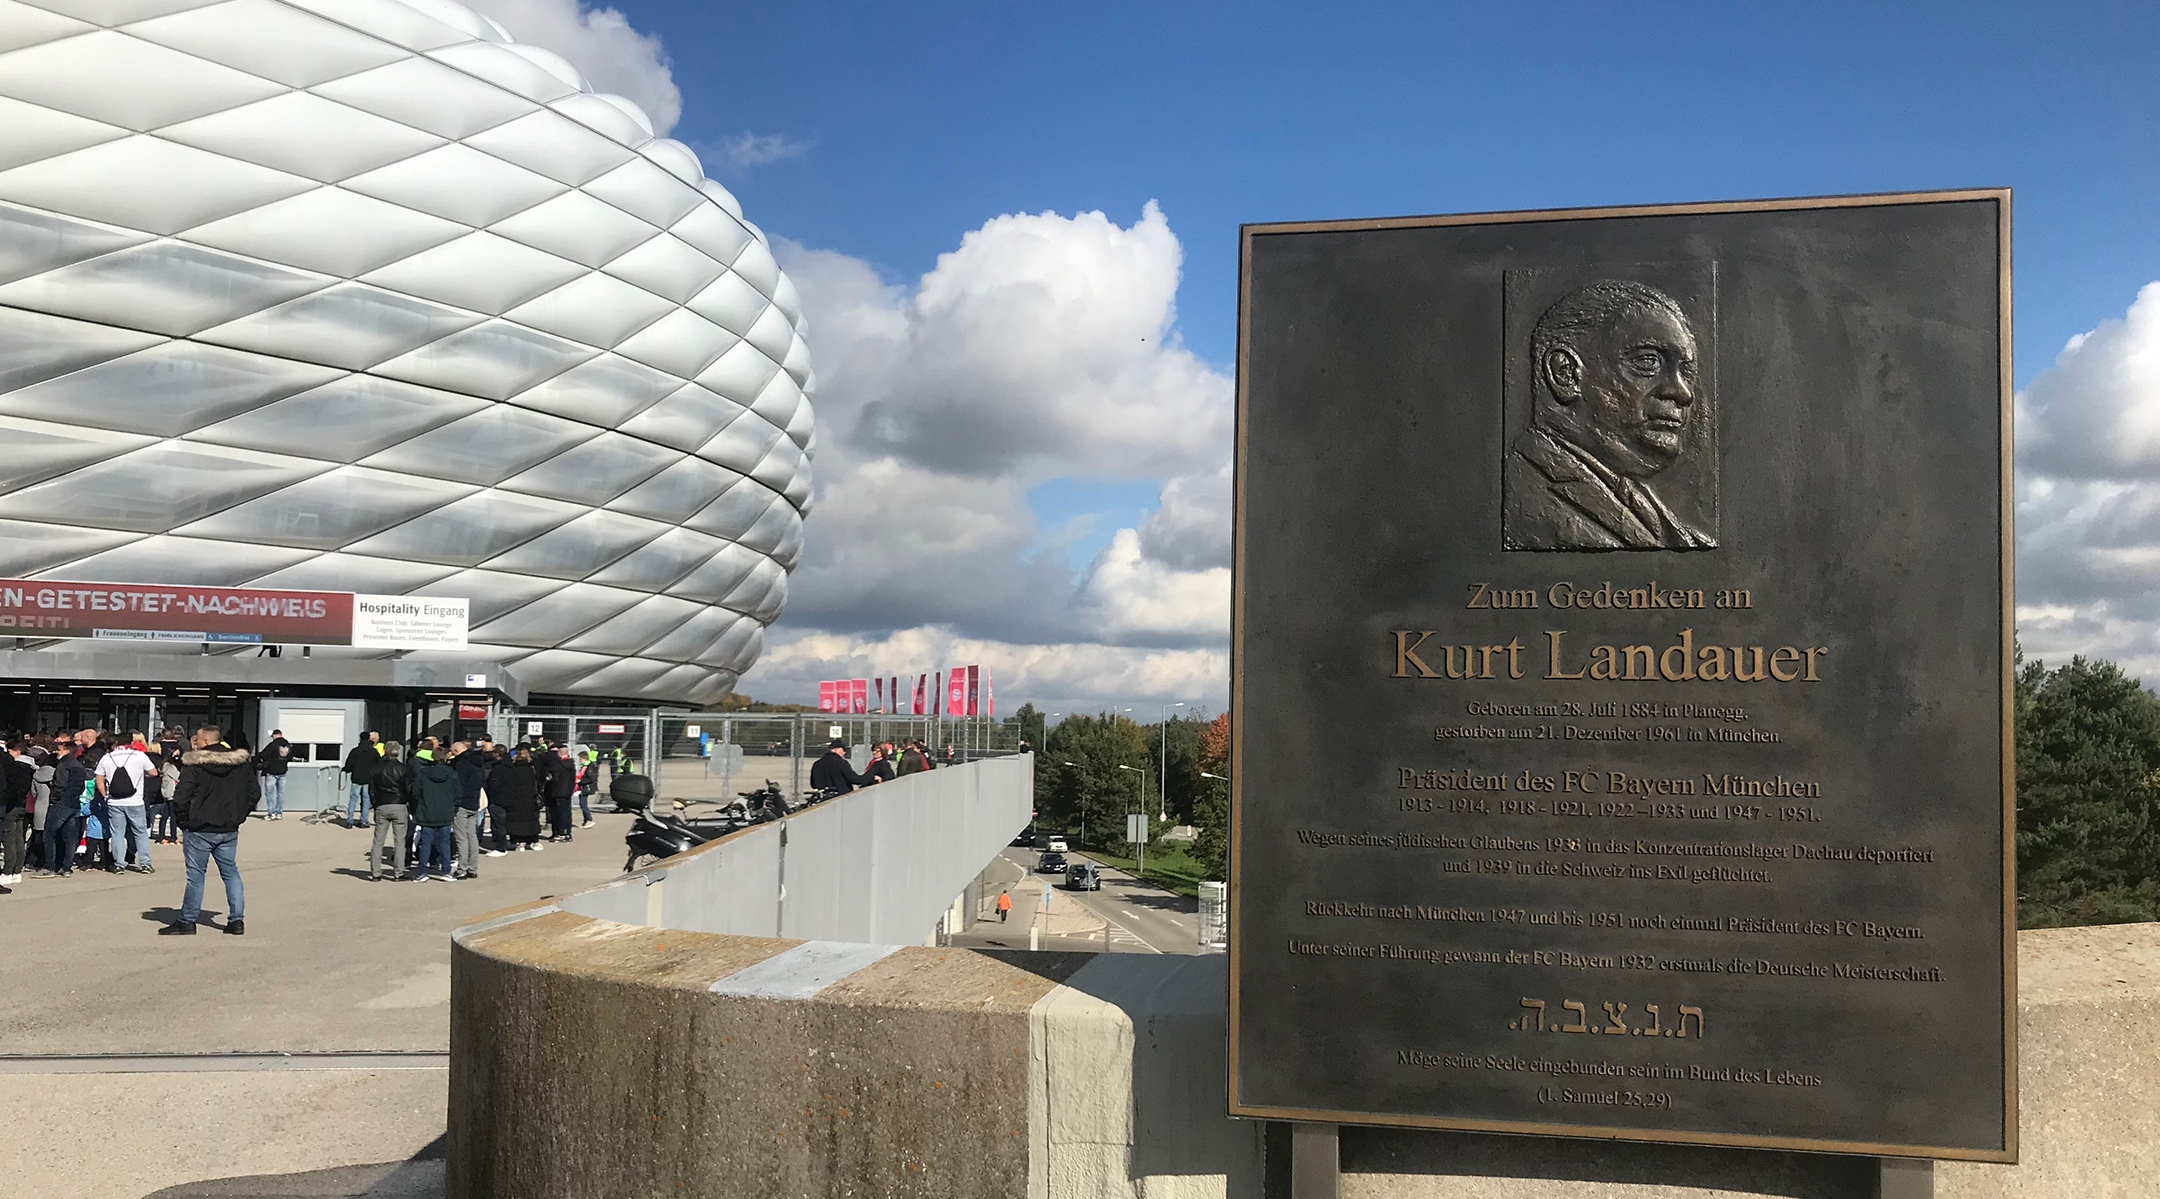 A plaque honors Kurt Landauer at the Allianz Arena, the stadium of FC Bayern Munich.